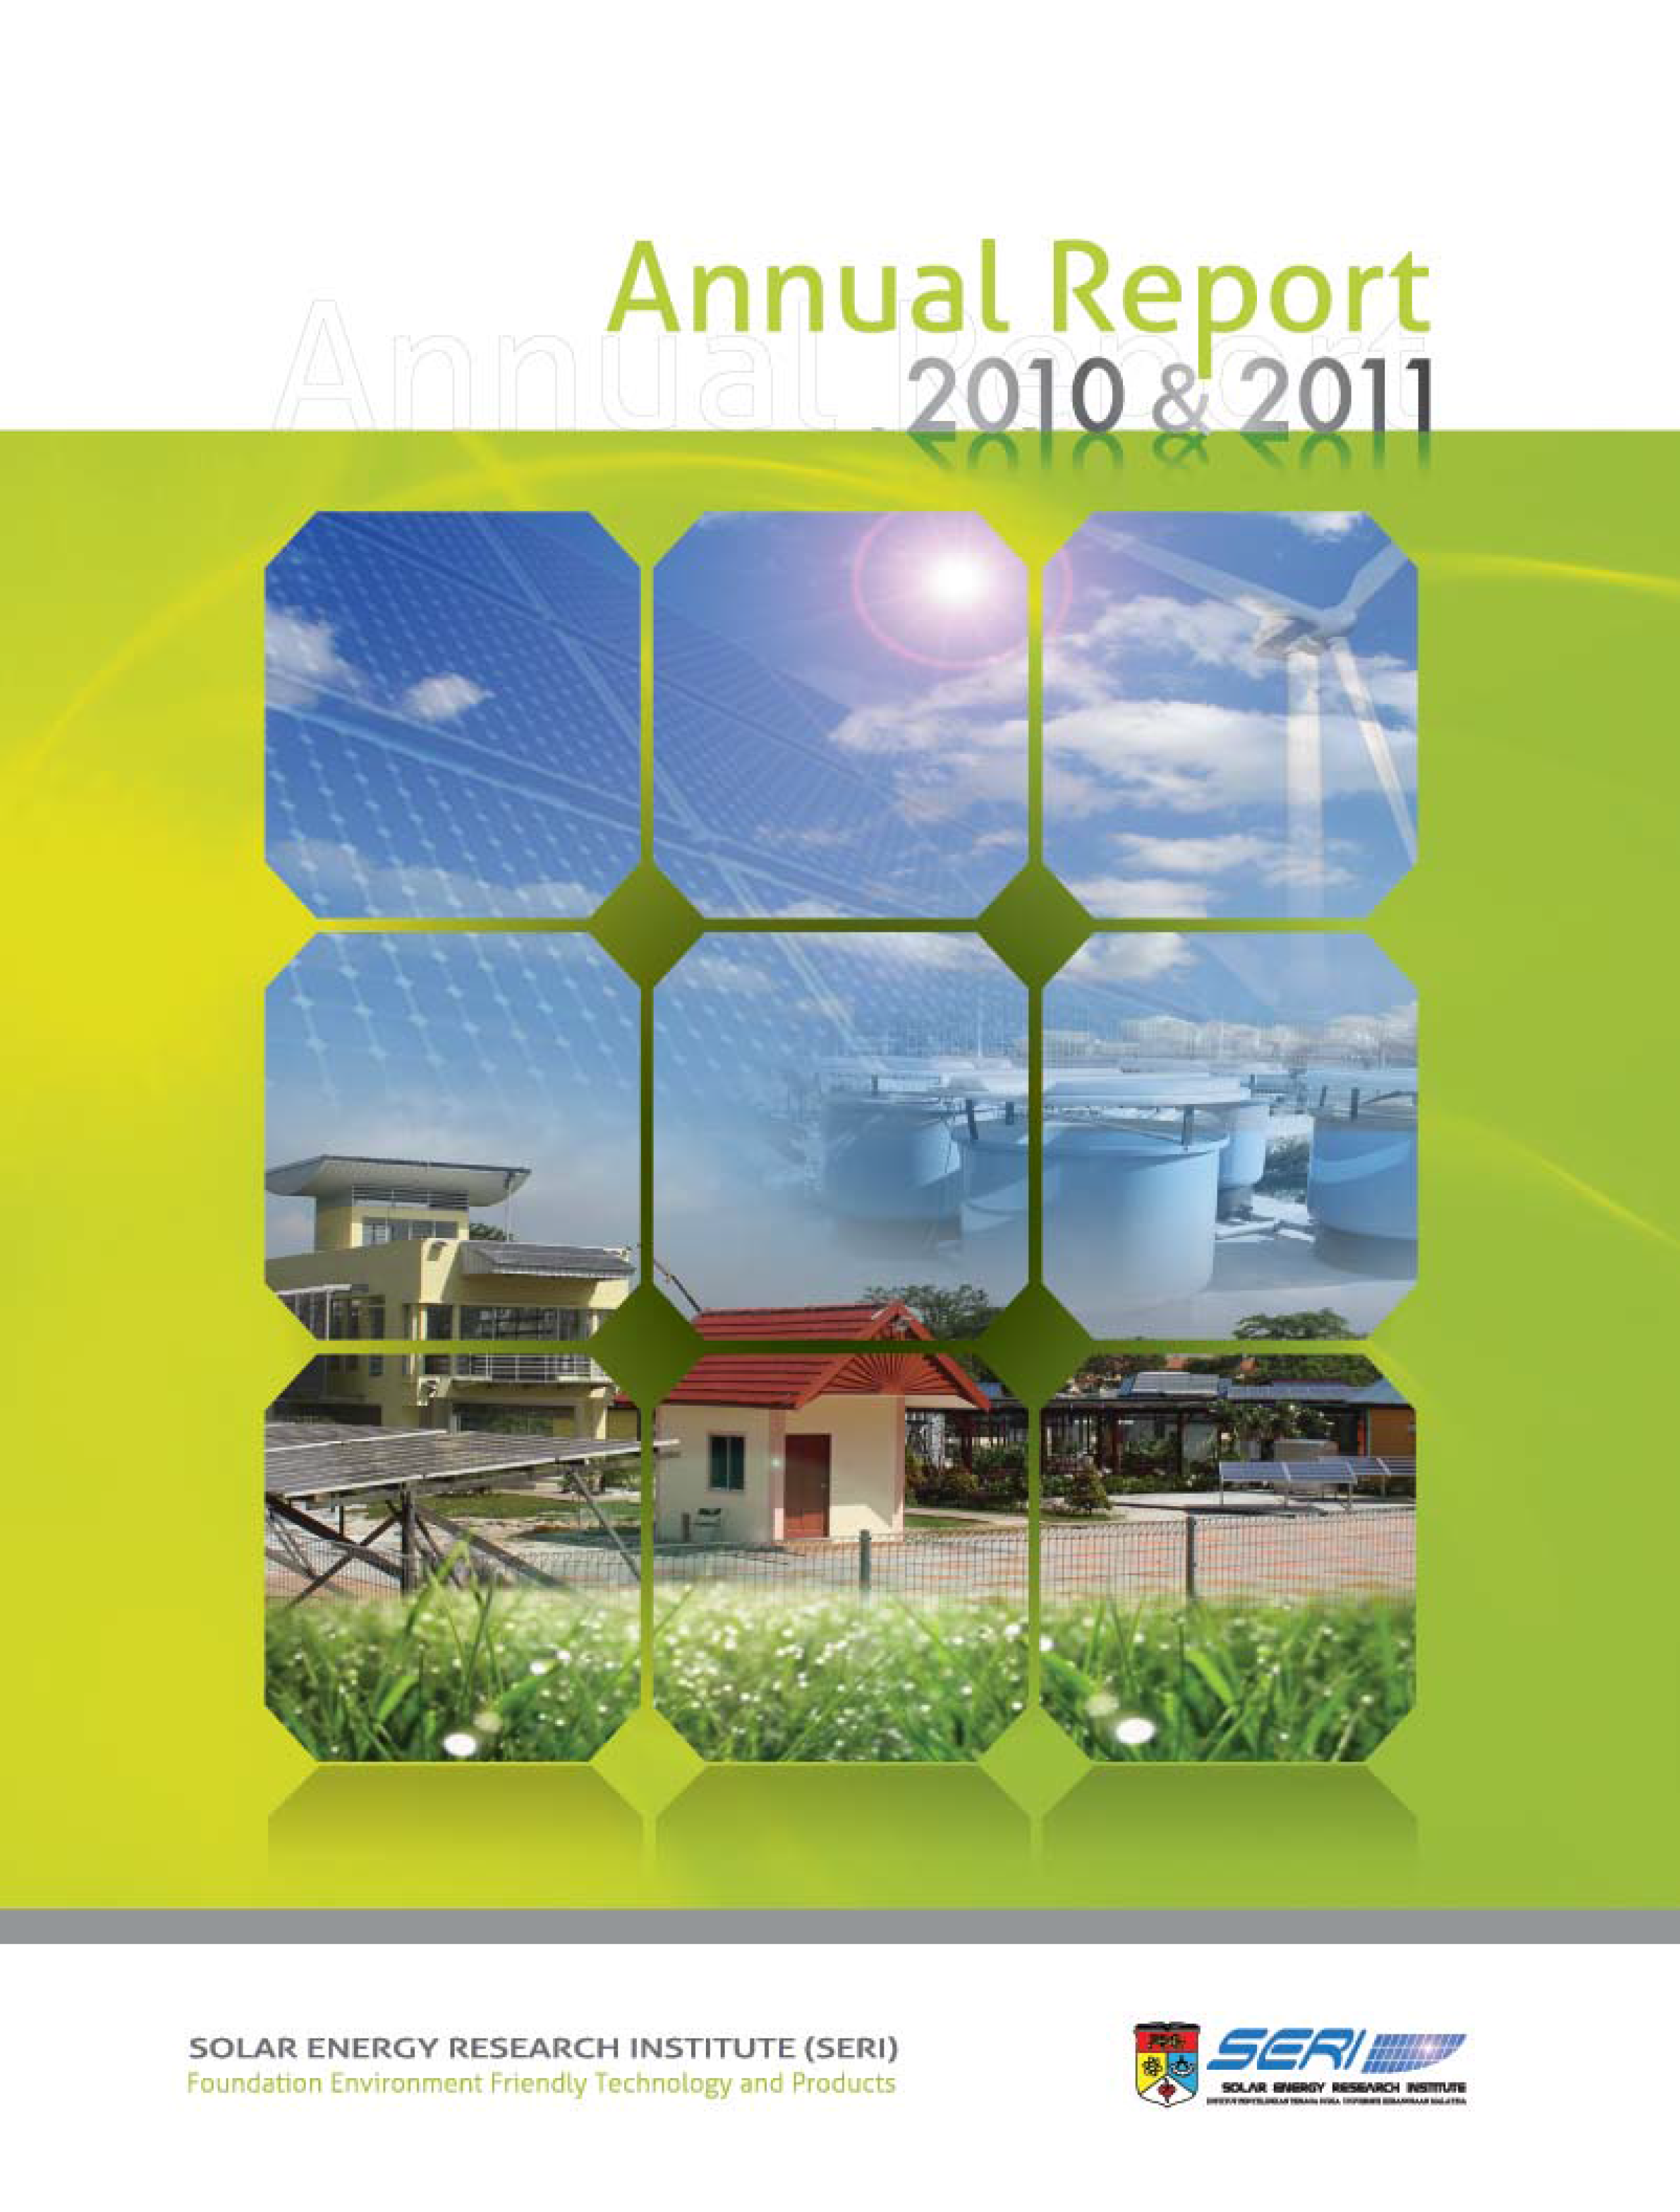 Energy australia annual report 2011